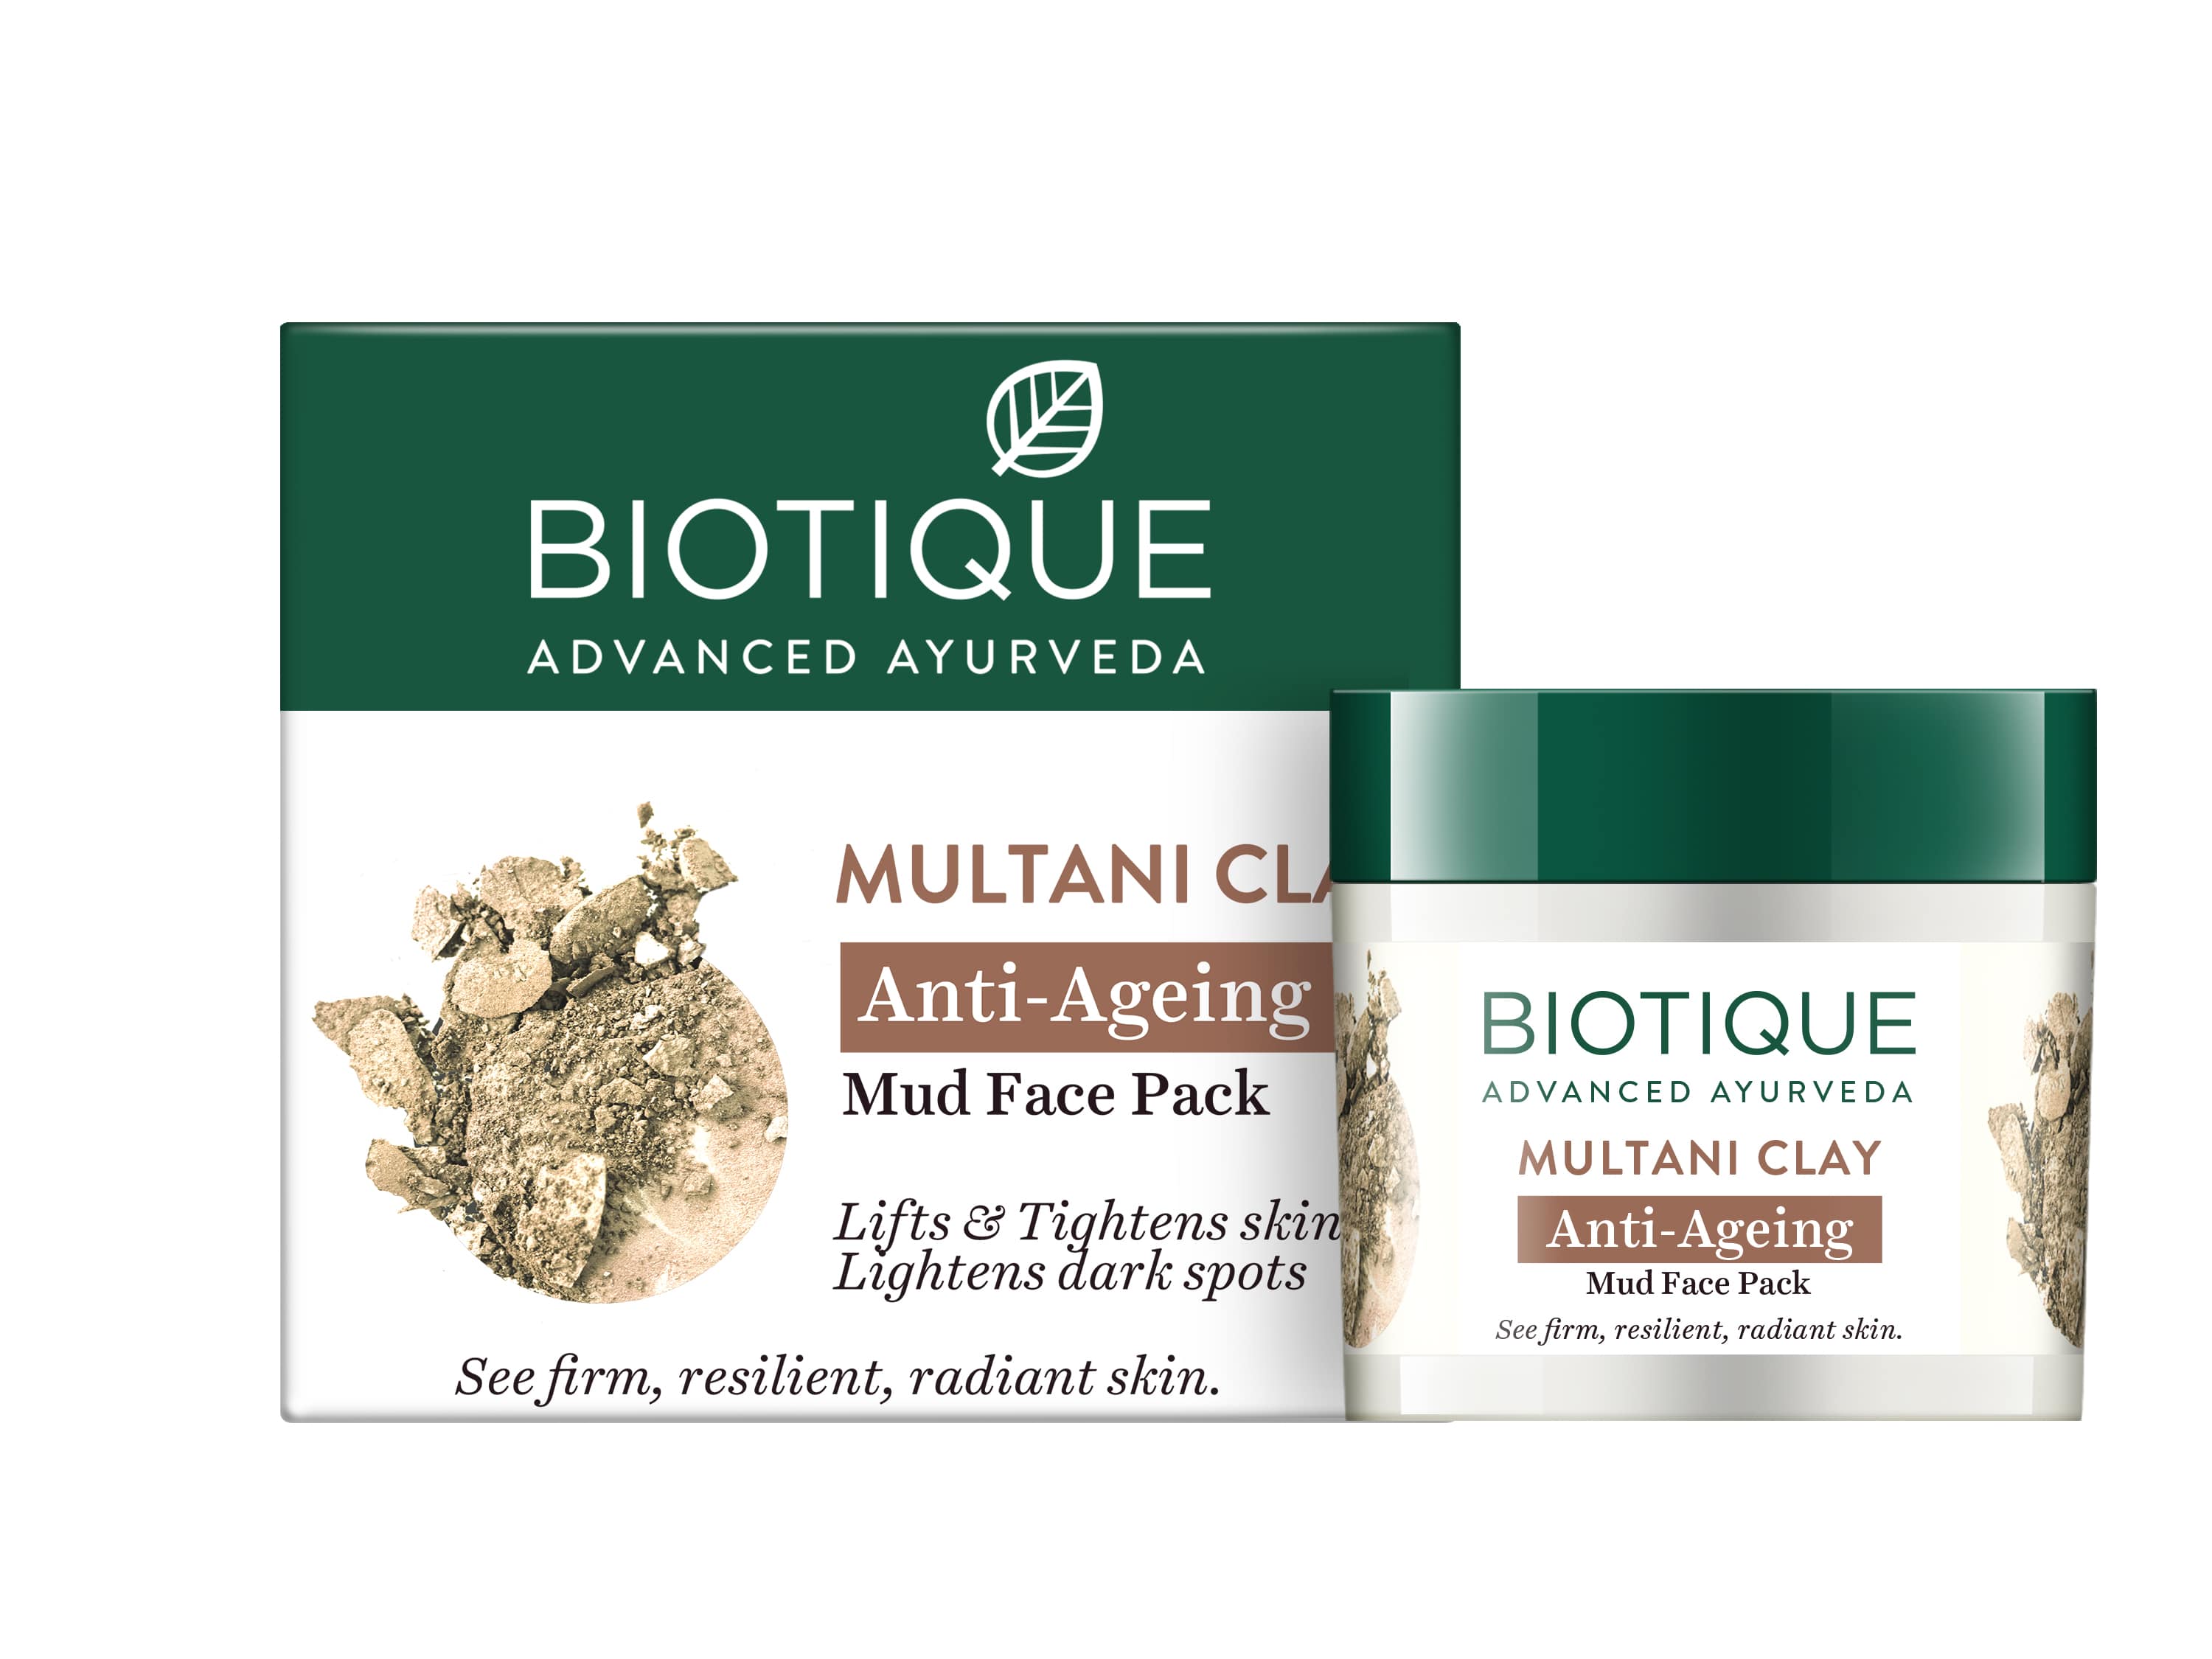 MULTANI CLAY Anti-Ageing Mud Face Pack 75g